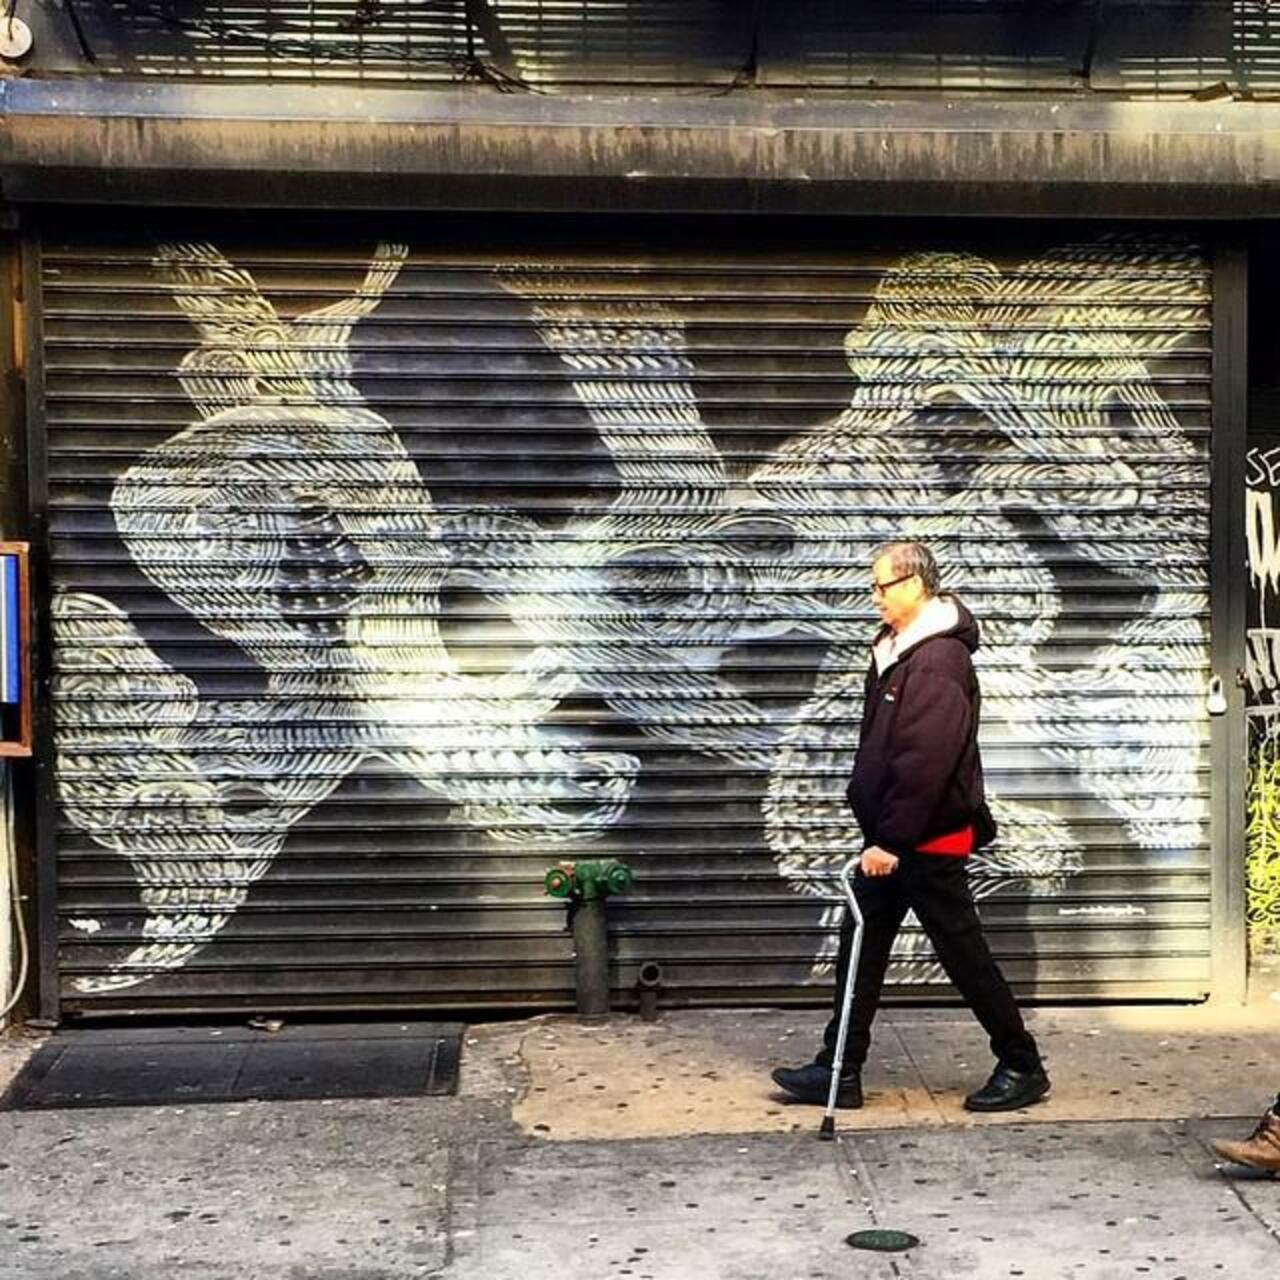 Mural Graffiti Art
LES NYC 
#rollingdoors #doors #mural #graff #graffiti #graffitinyc #outsider #outsiderart #stree… http://t.co/niASi3Yqwd